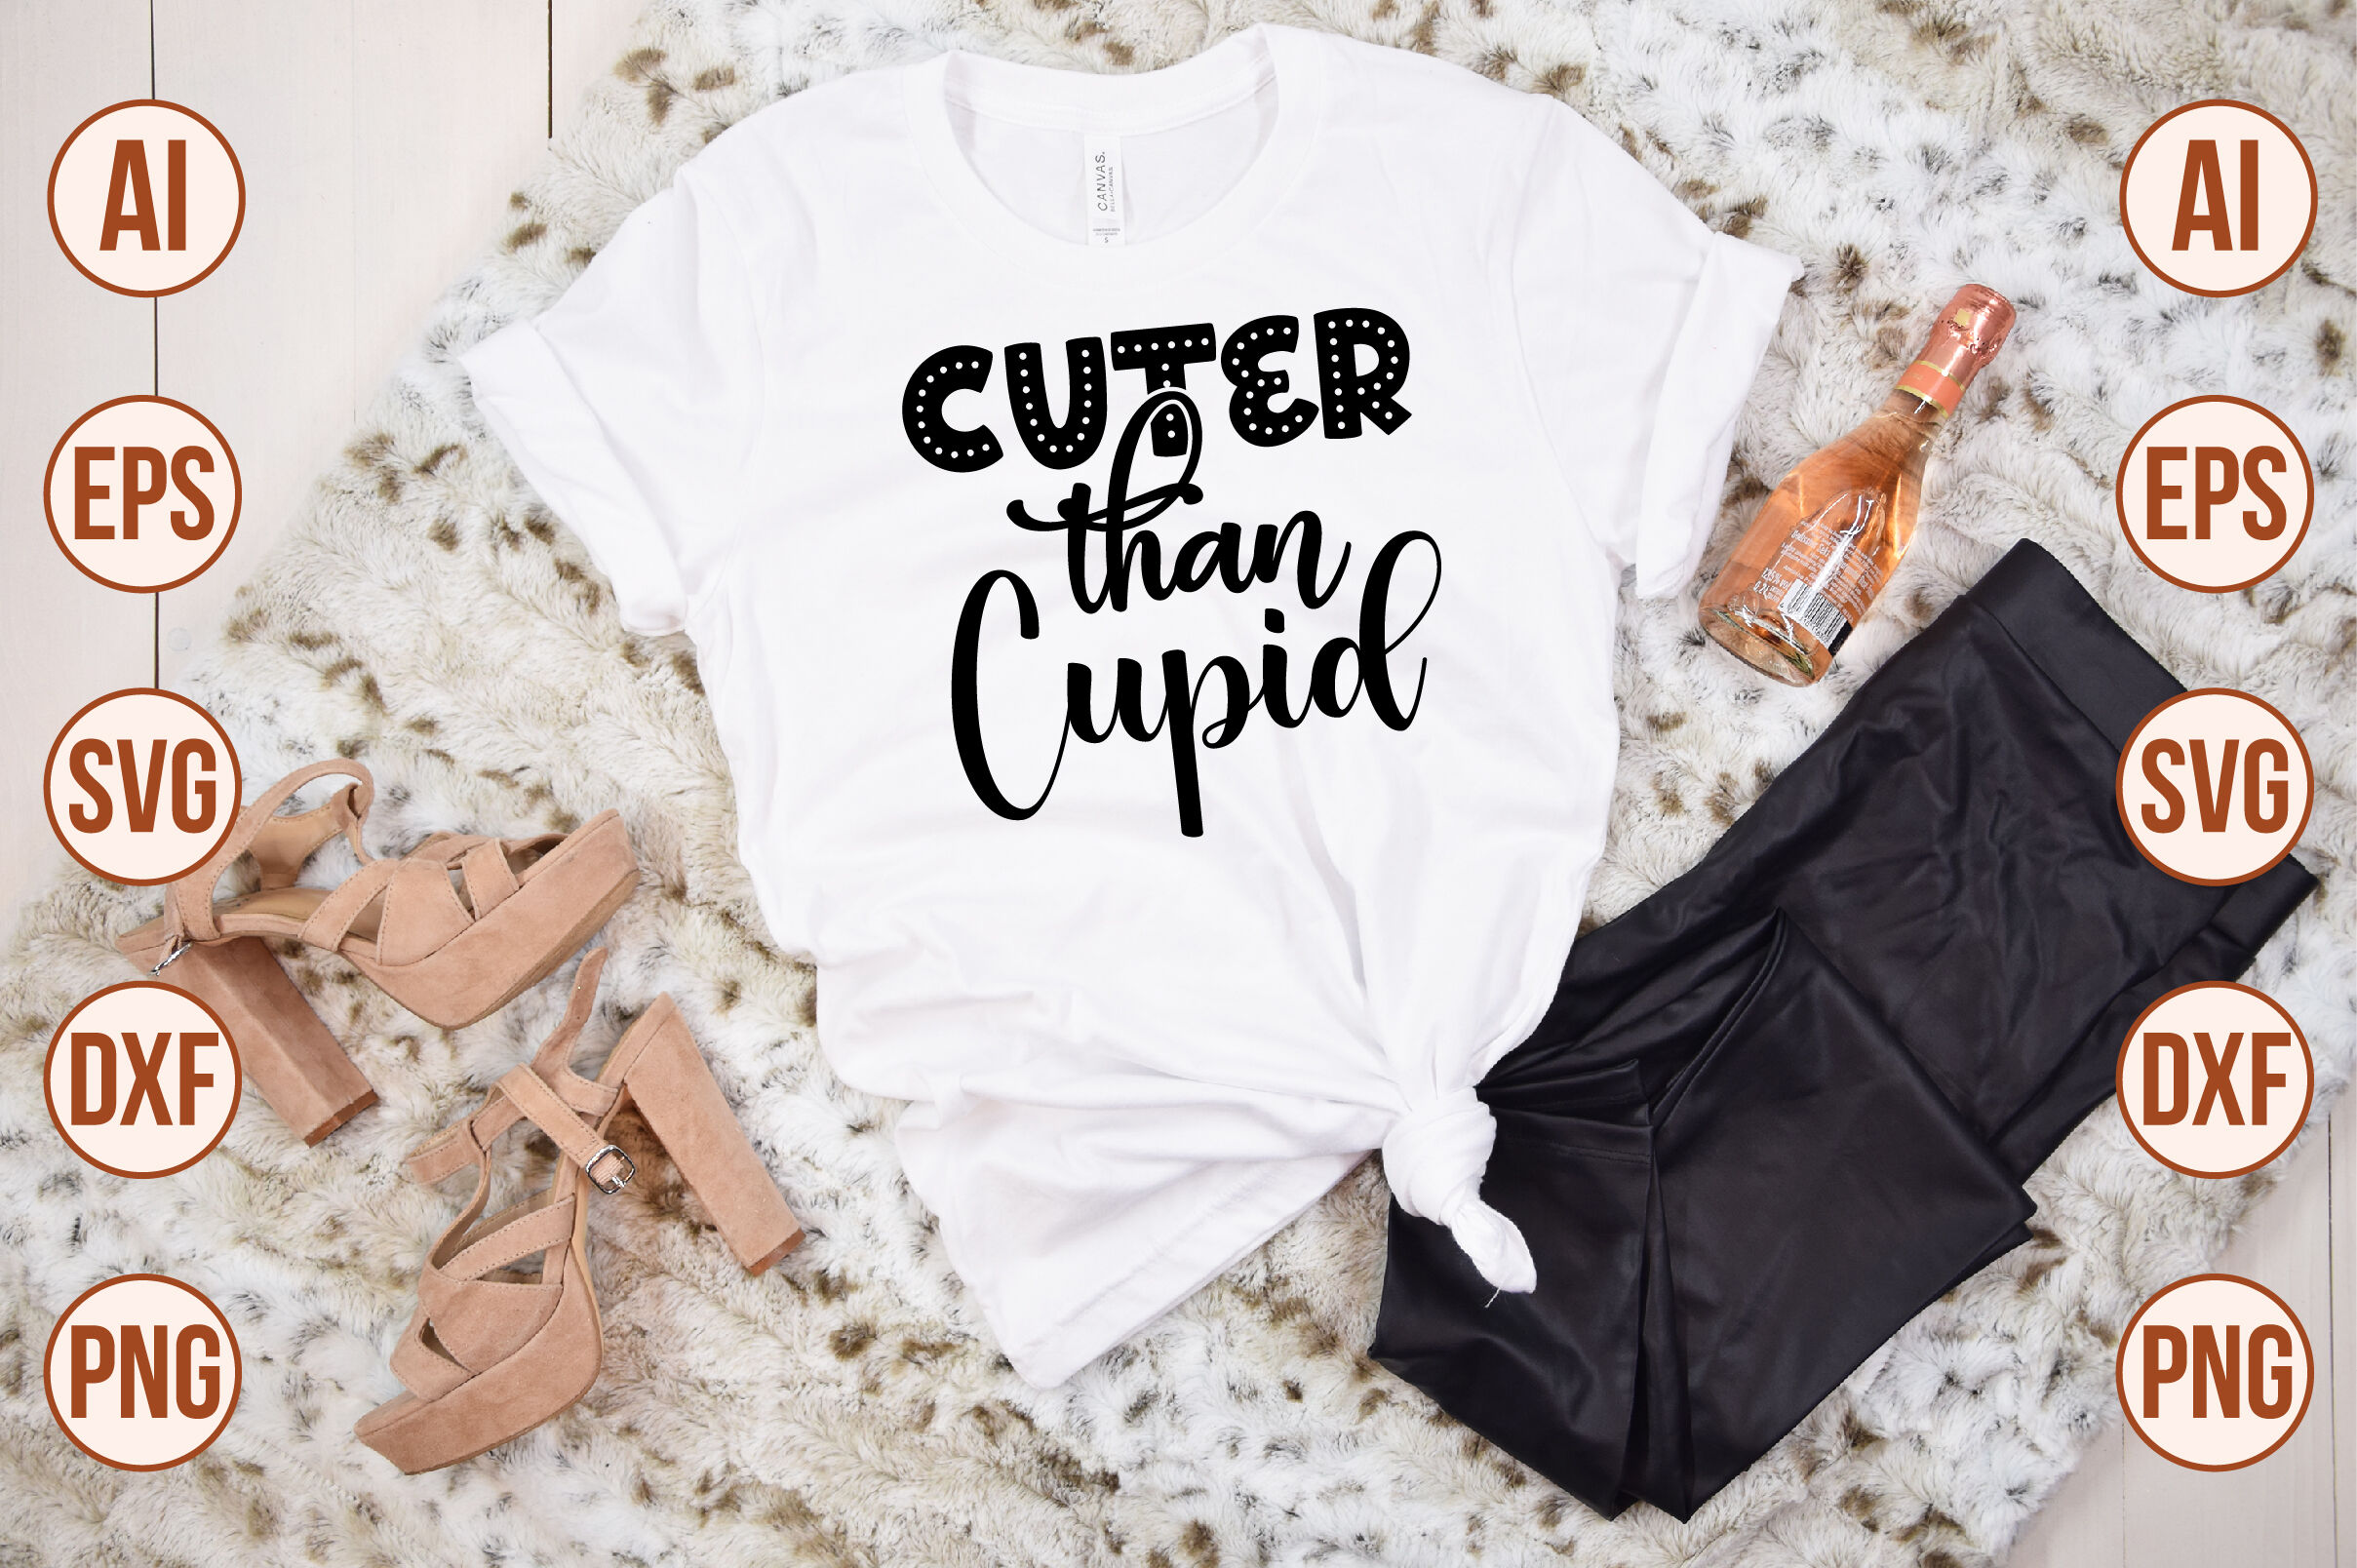 Cuter than cupid SVG By orpitabd | TheHungryJPEG.com